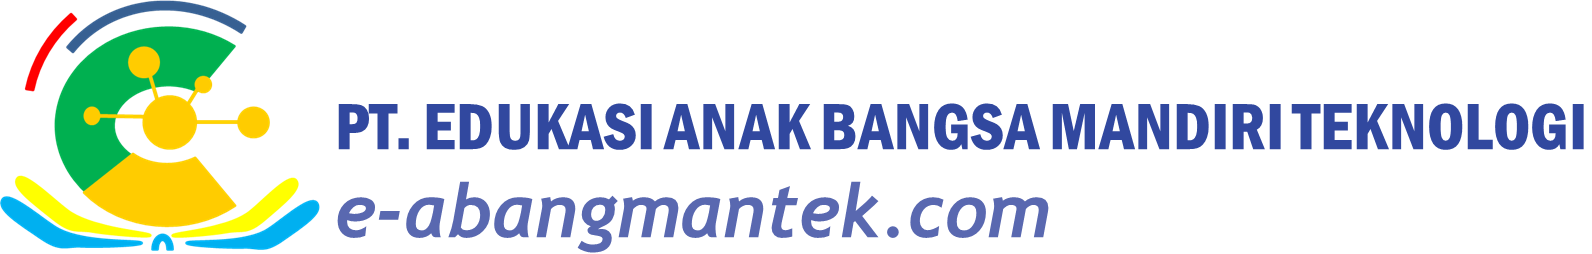 e-abangmantek.com